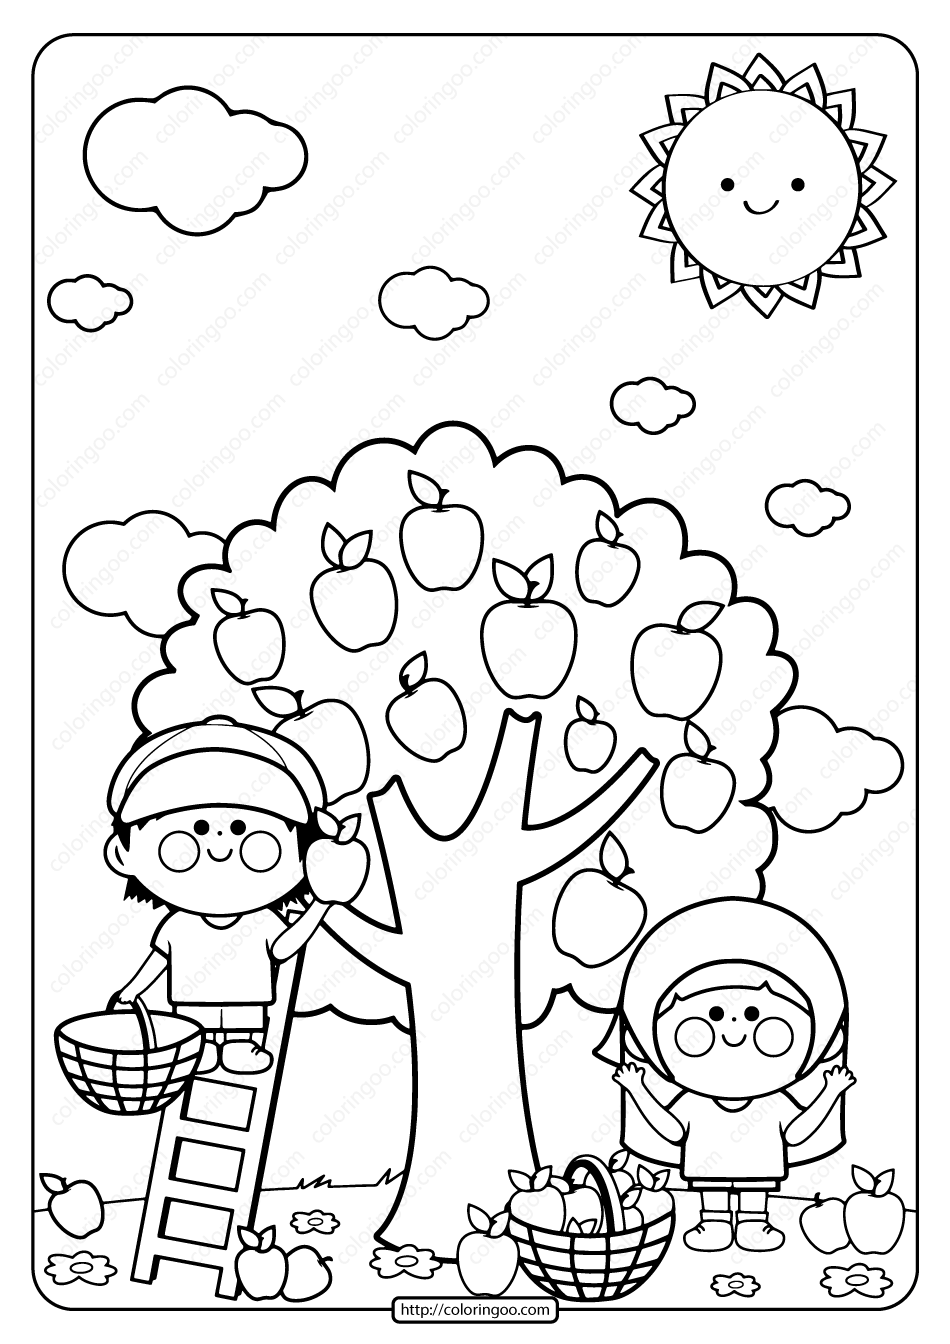 printable children picking apples pdf coloring page